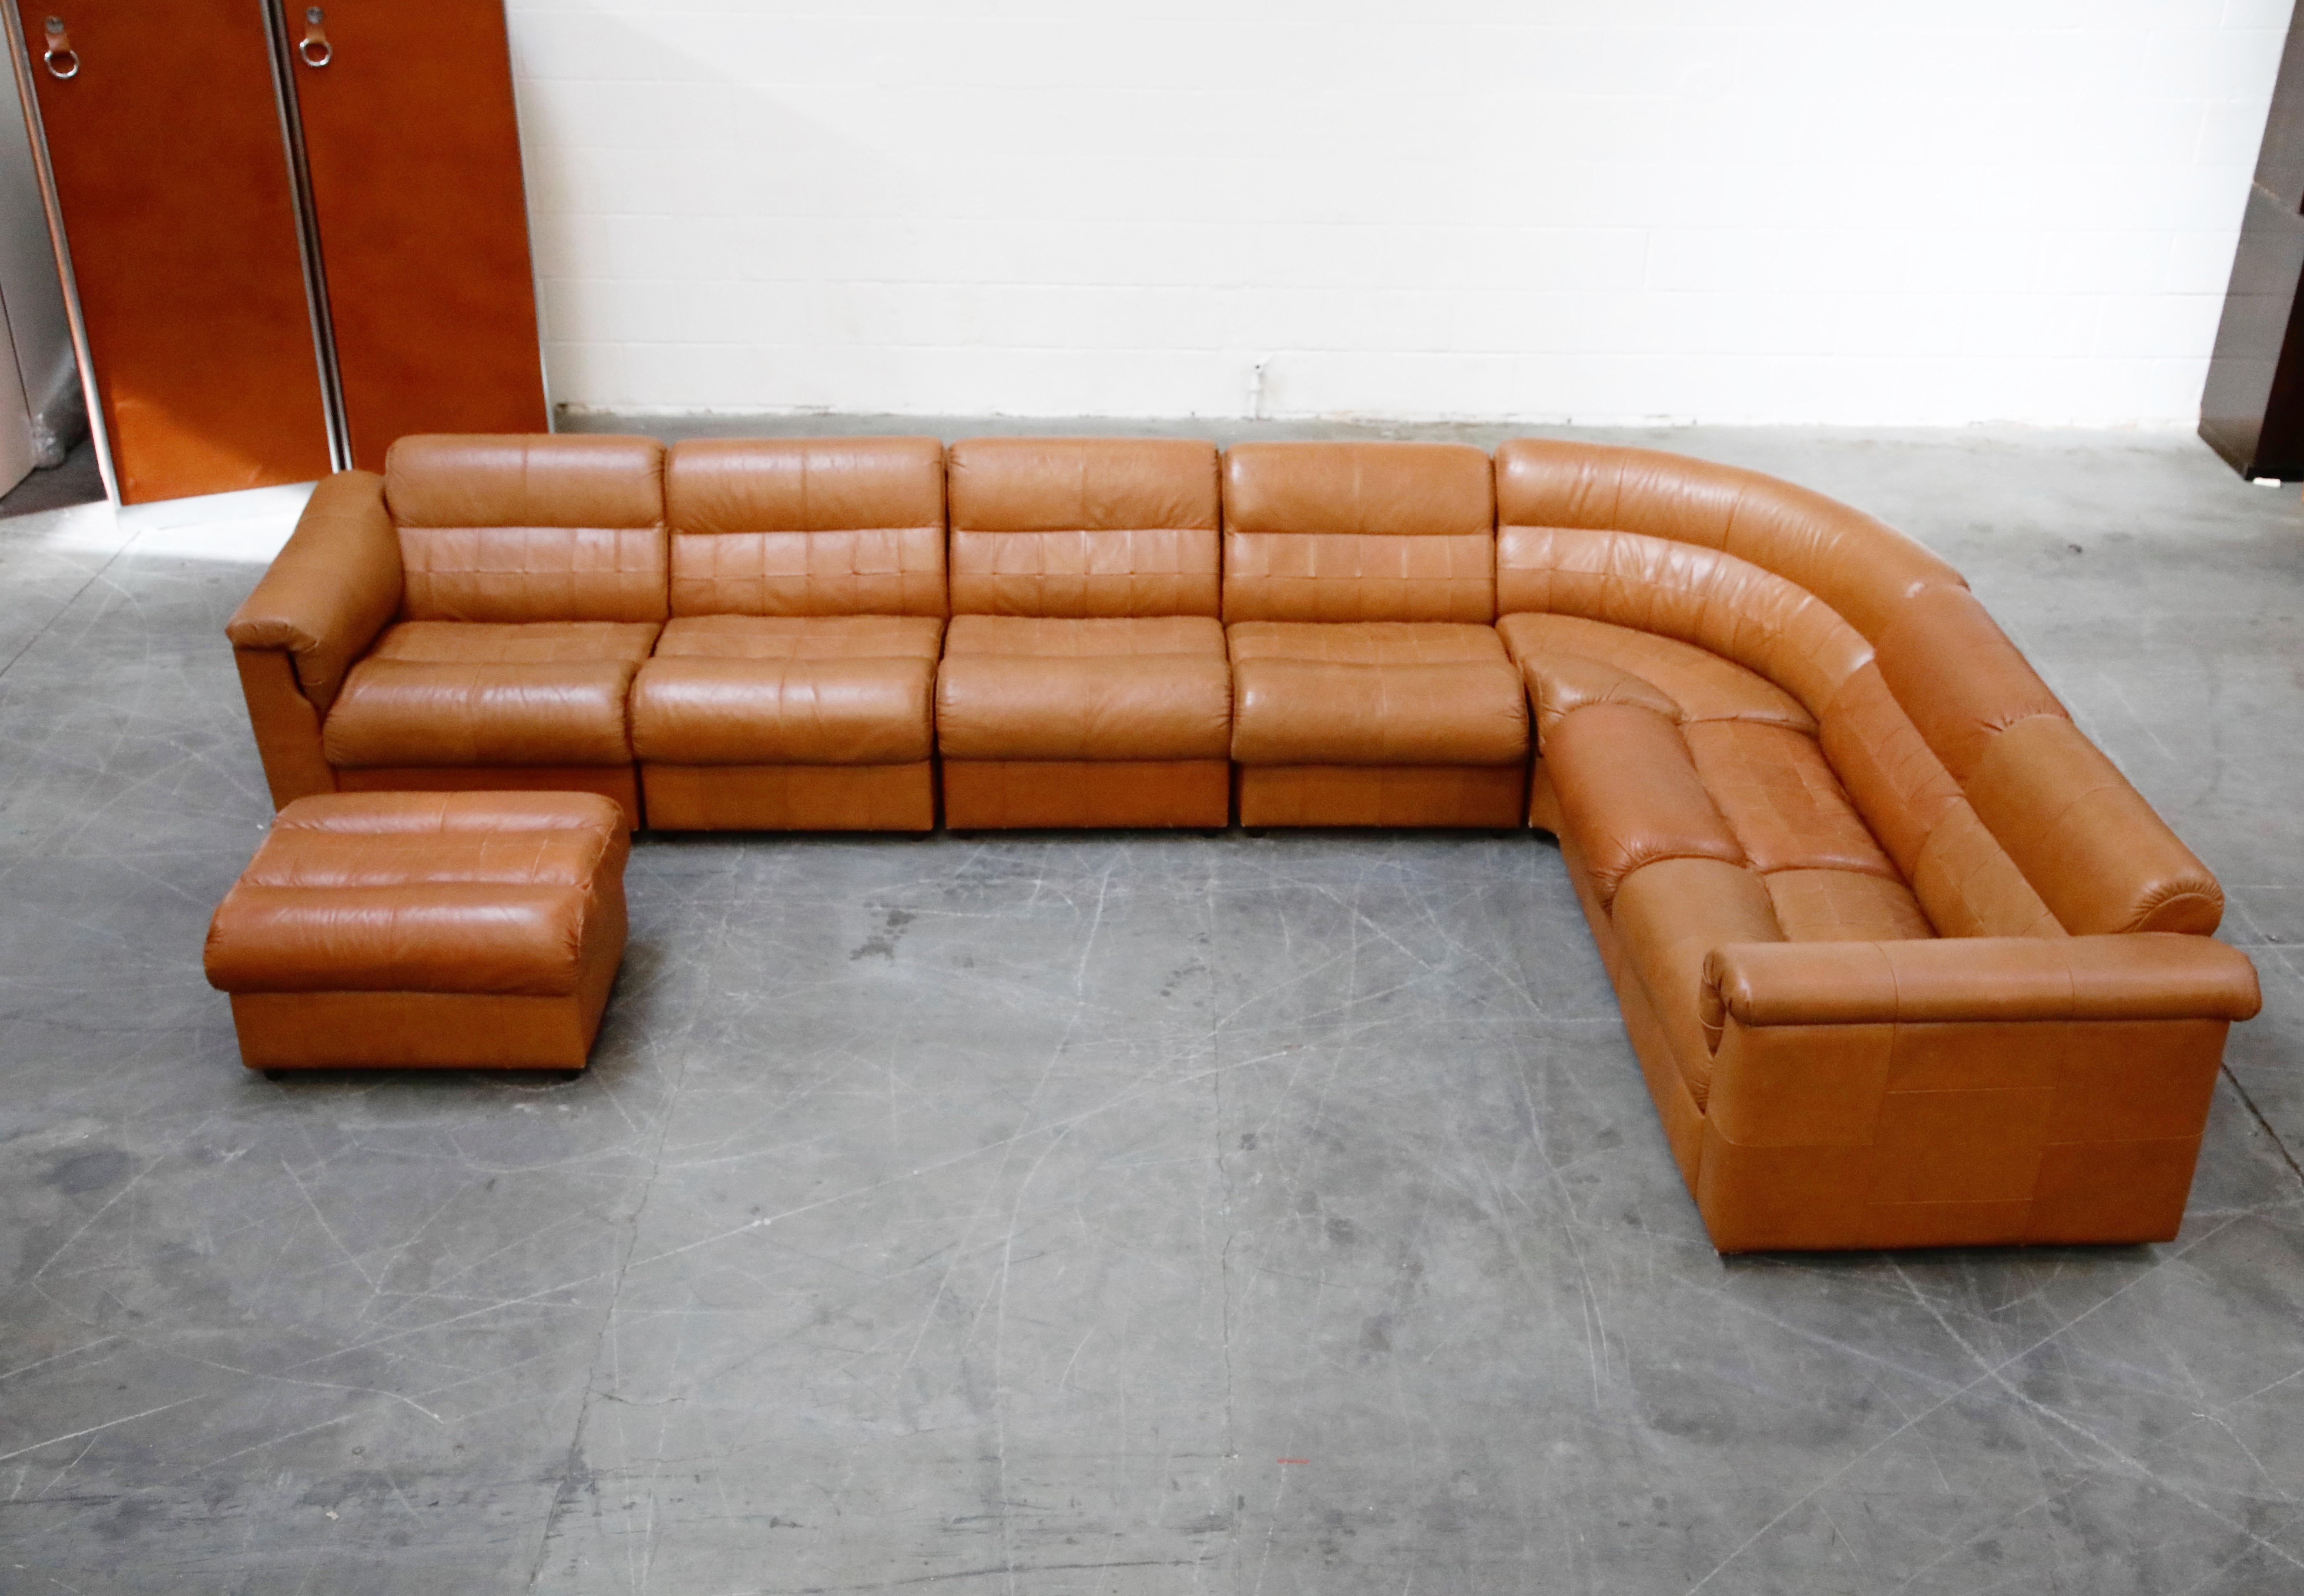 Brazilian Percival Lafer Patchwork Leather Modular Living Room Set, circa 1960 Signed